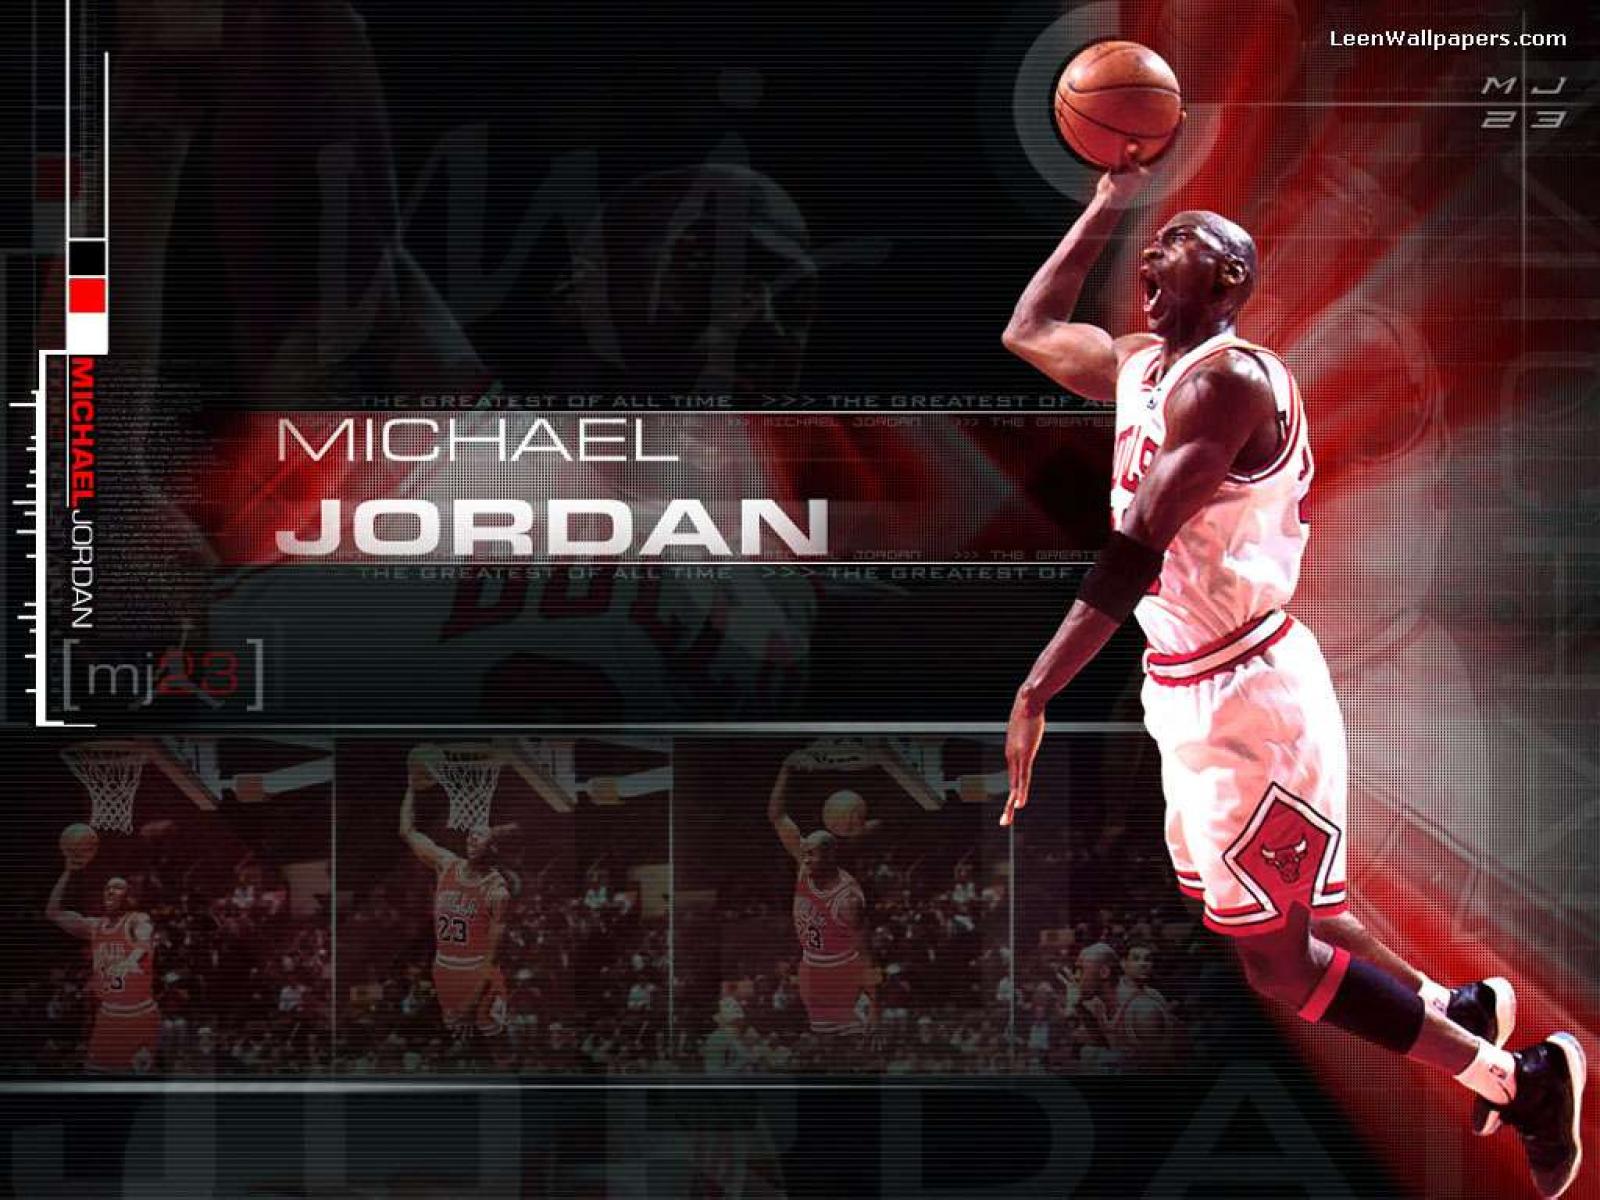  wallpapers basketball wallpaper basketball background michael jordan